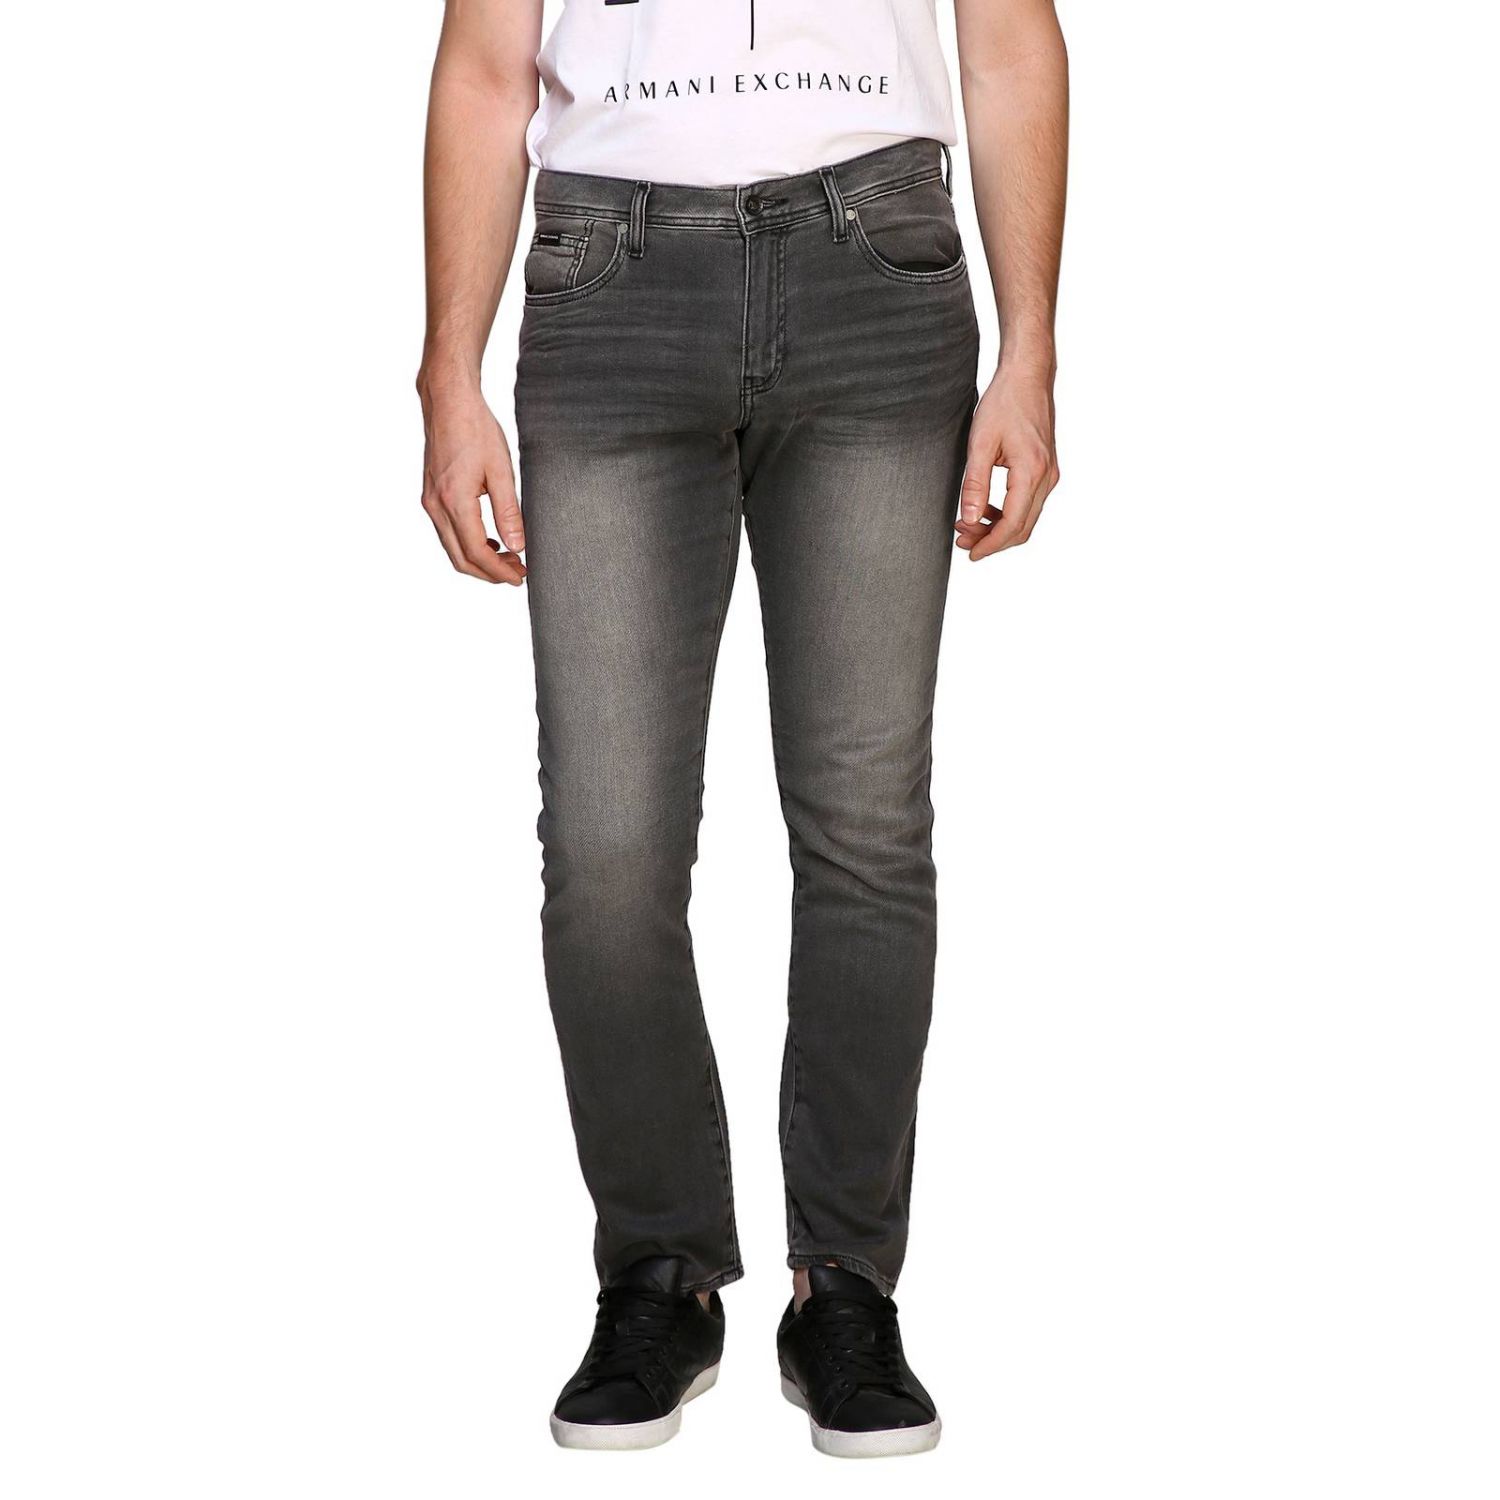 Armani Exchange Outlet: Jeans men | Jeans Armani Exchange Men Grey ...